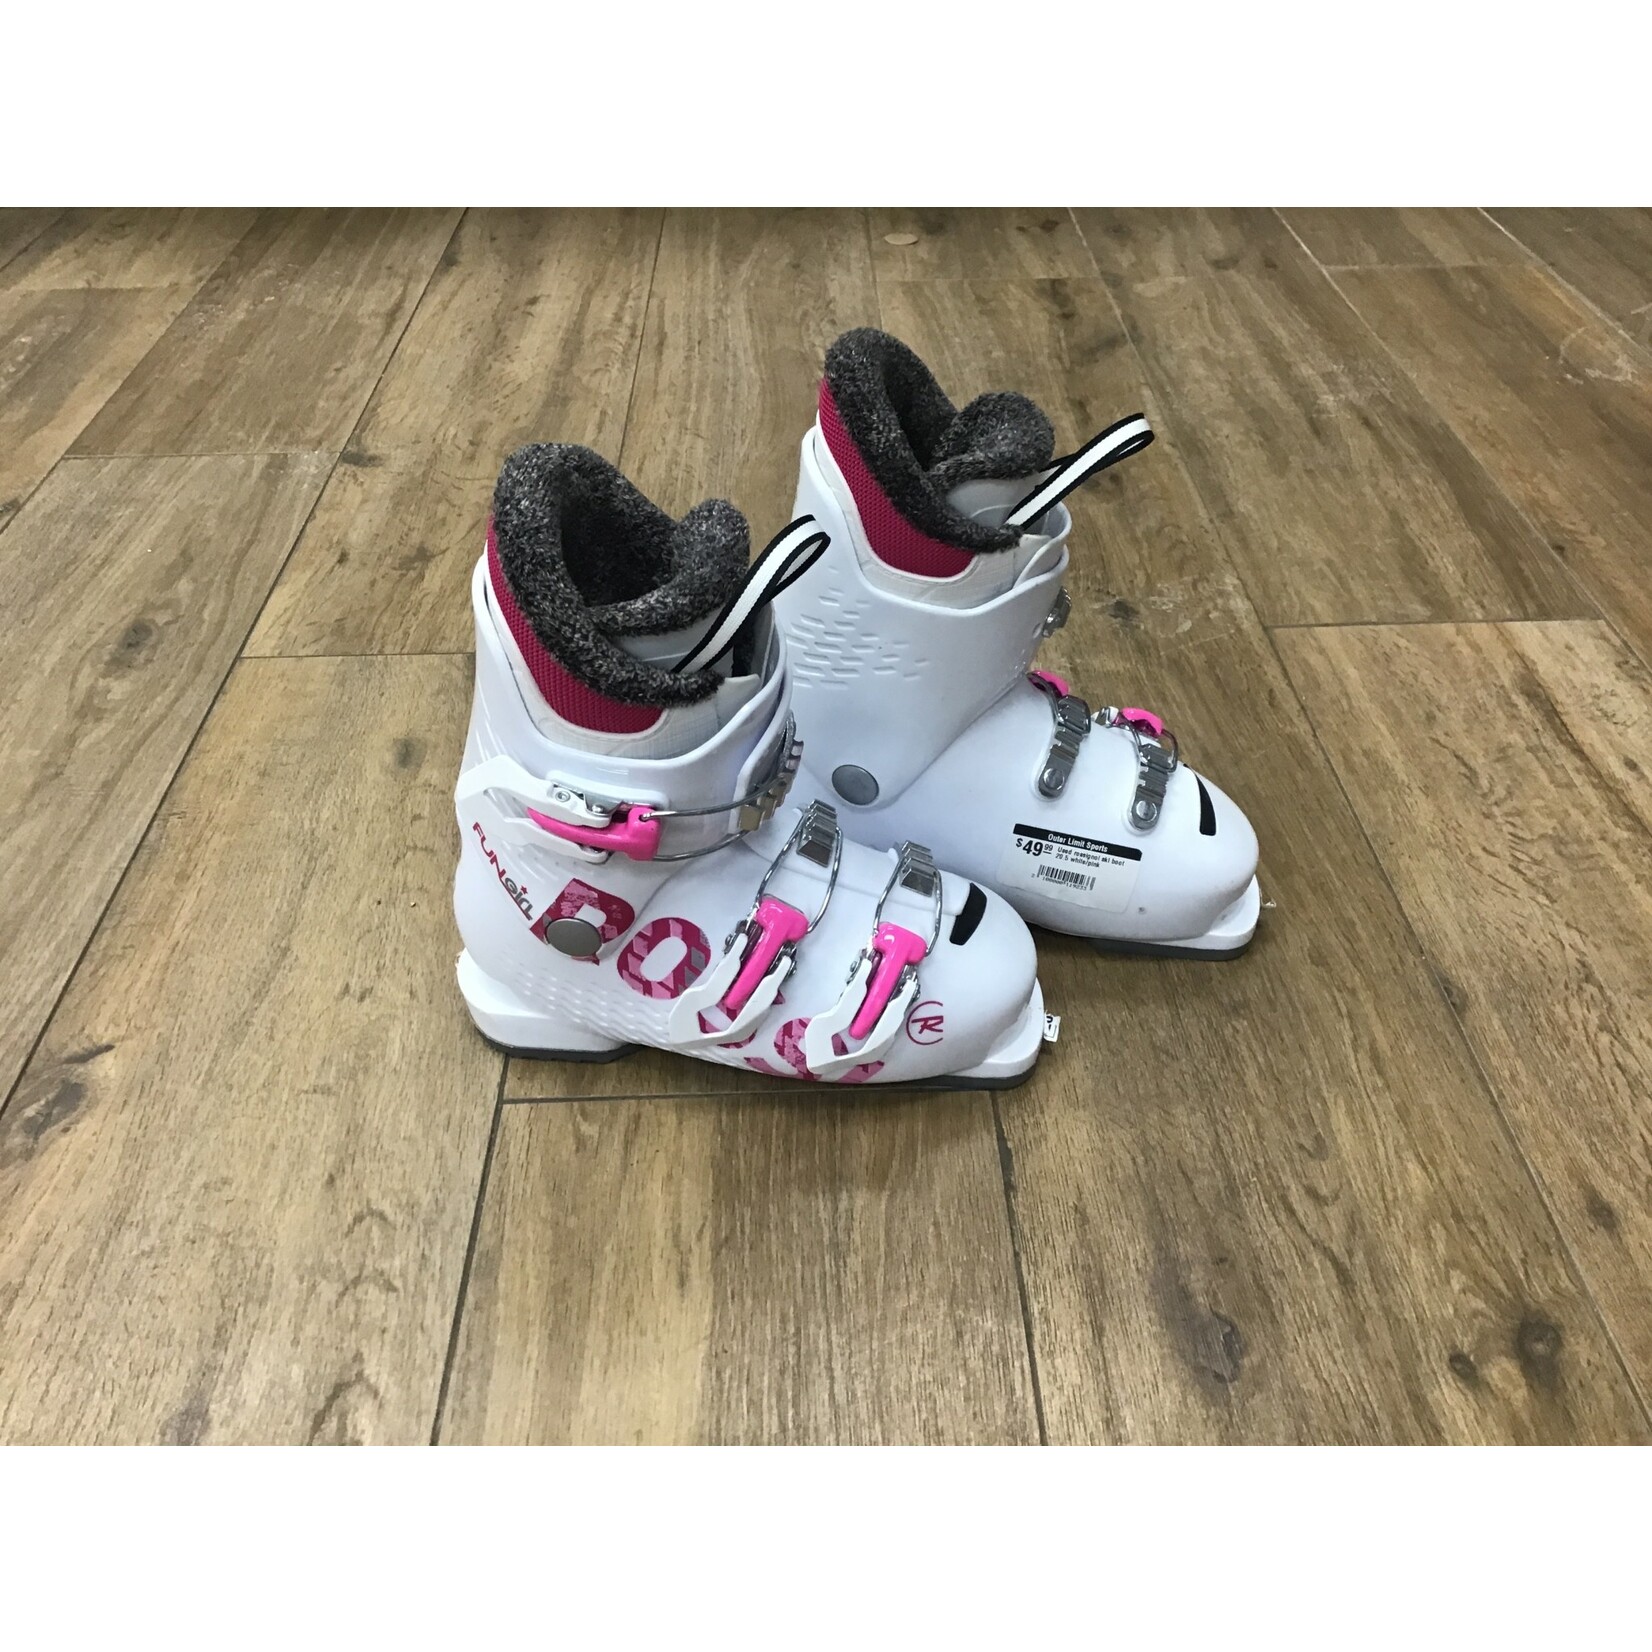 Used rossignol fun girl 3 ski boot 20.5 white/pink